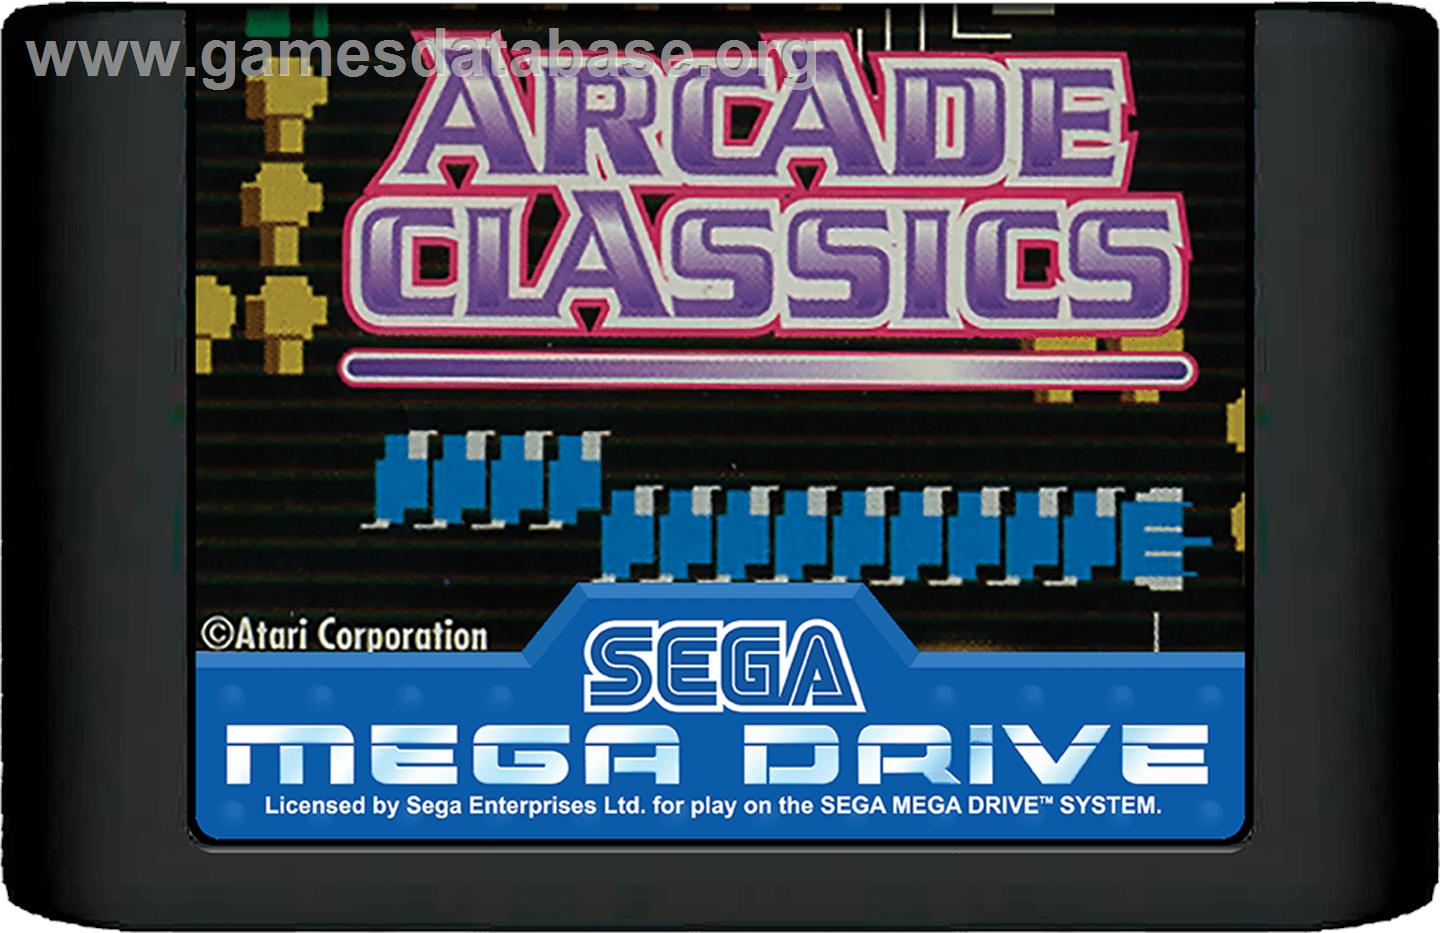 Arcade Classics - Sega Genesis - Artwork - Cartridge